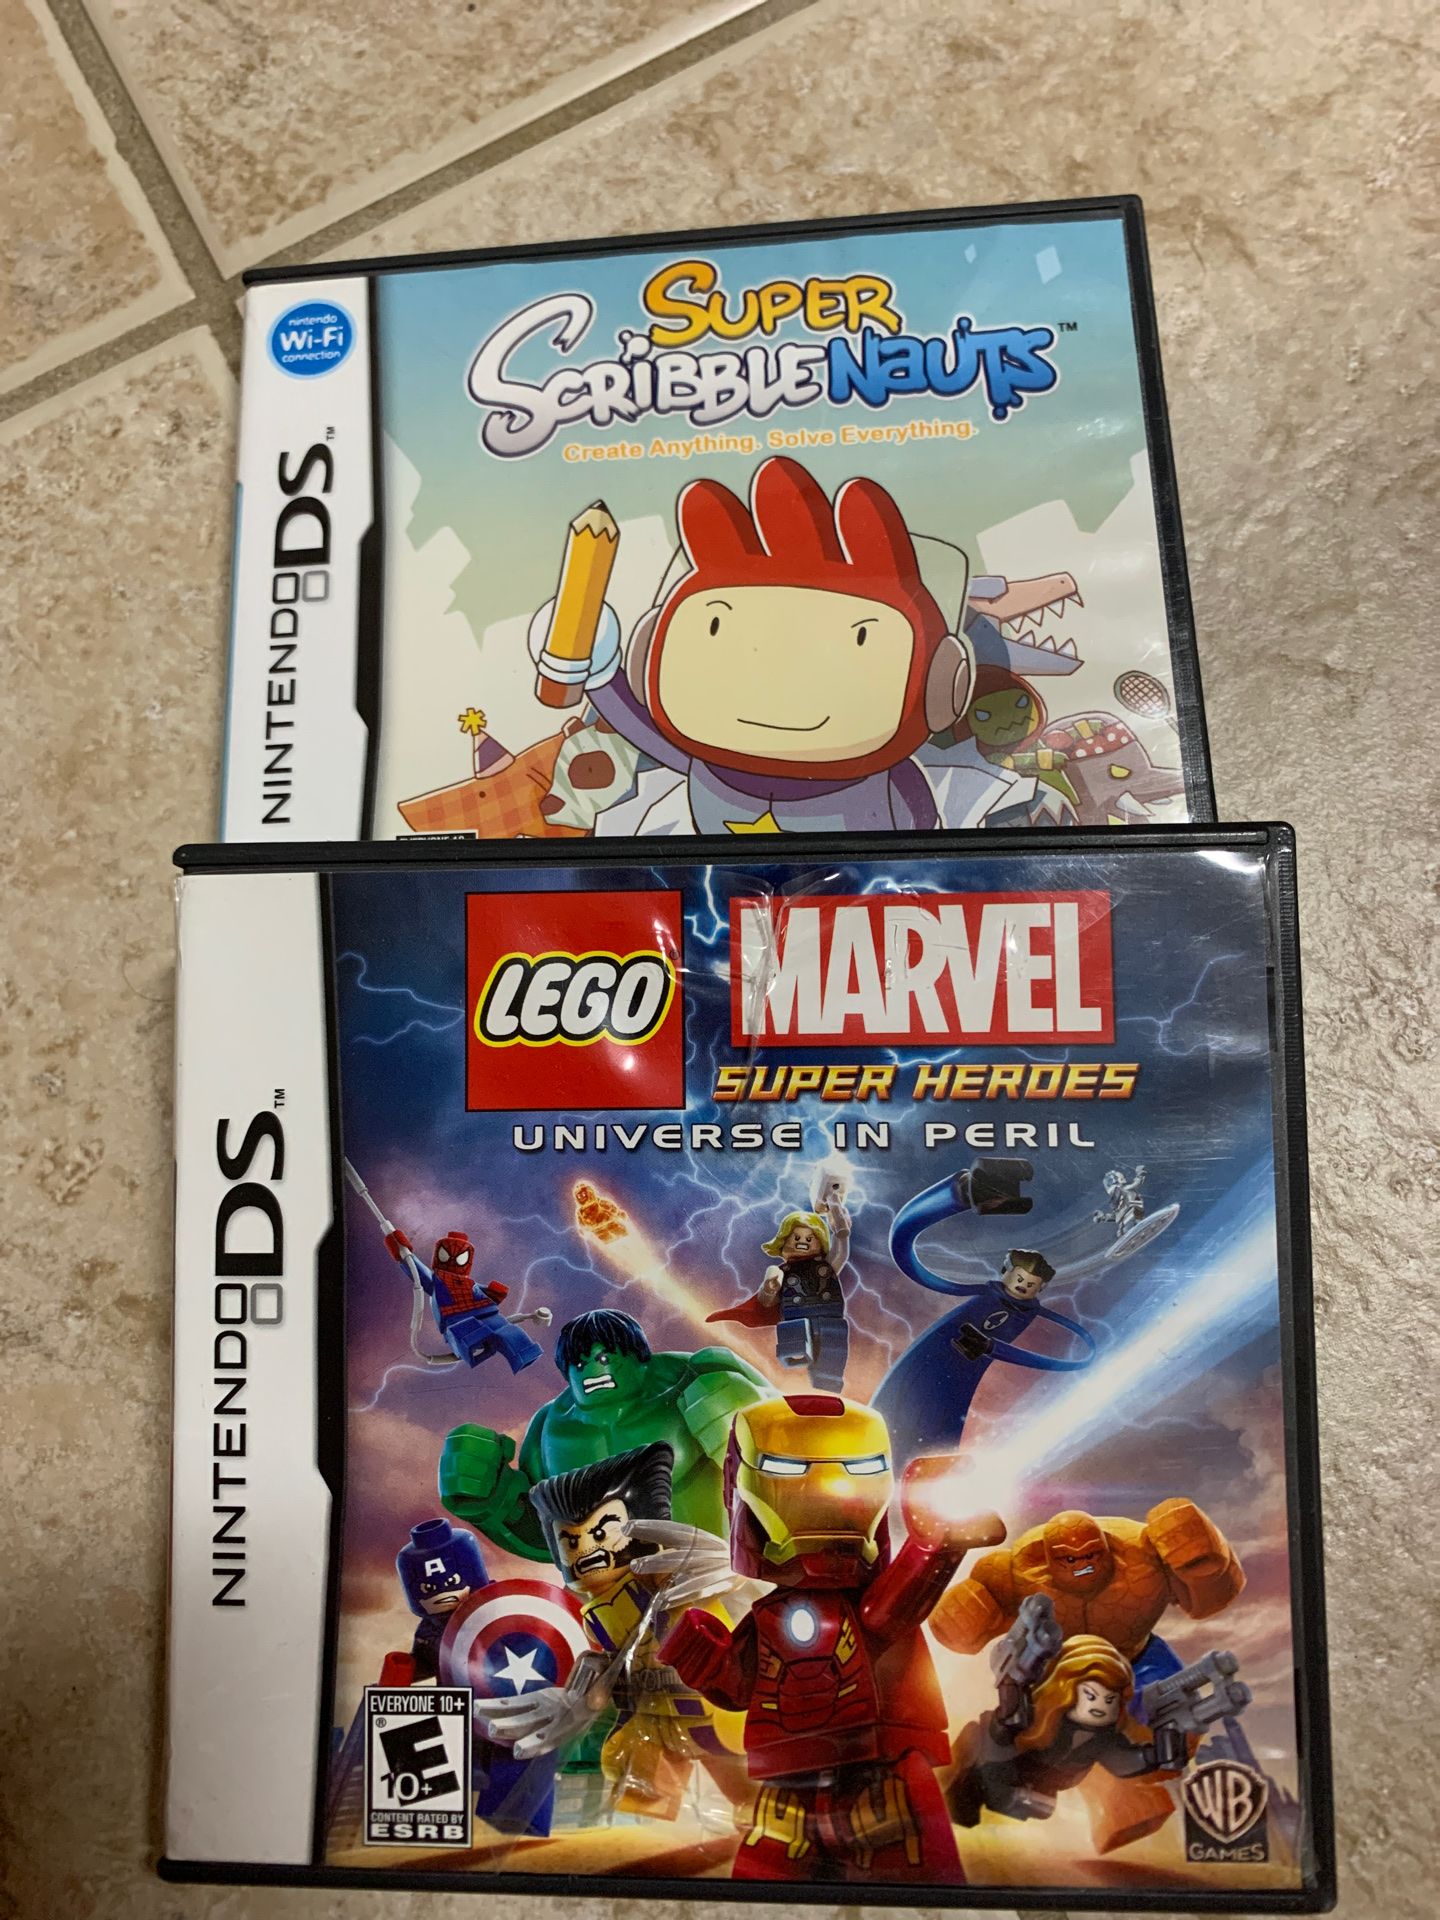 Nintendo DS Games LEGO Marvel Super Hero’s and Scribblenauts